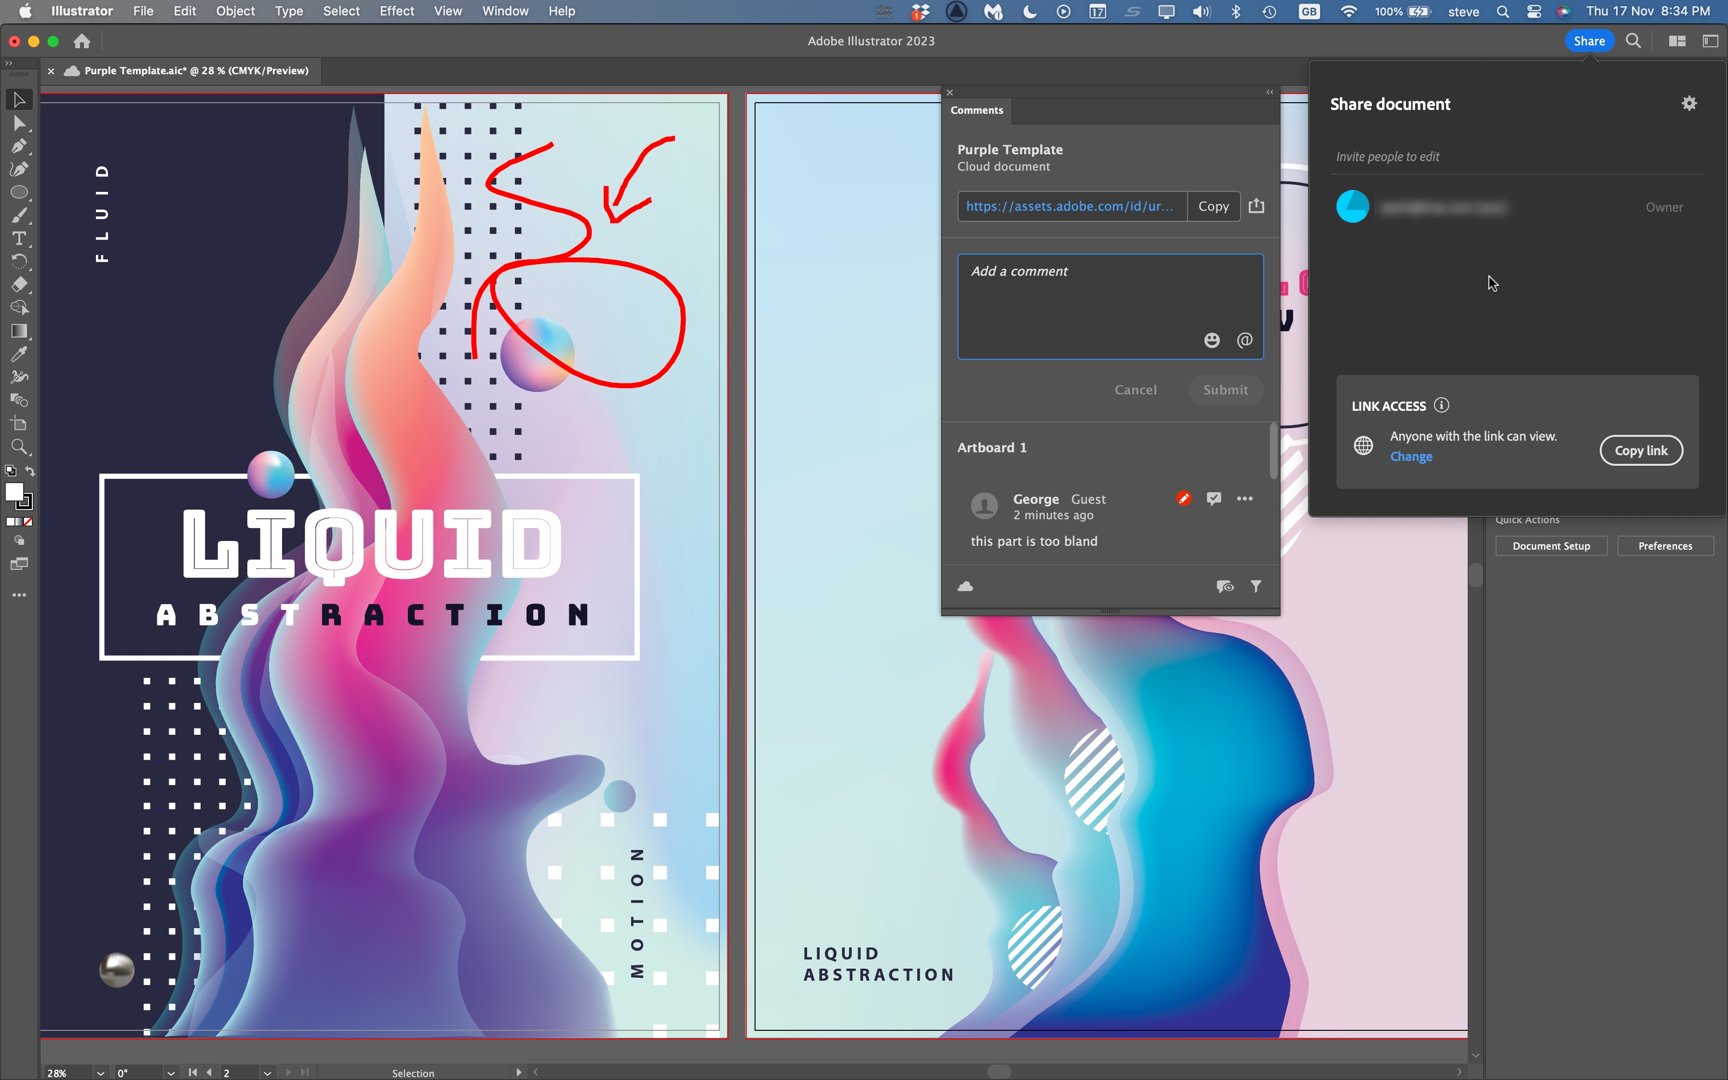 Grafikdesign-Software Adobe Illustrator in Aktion